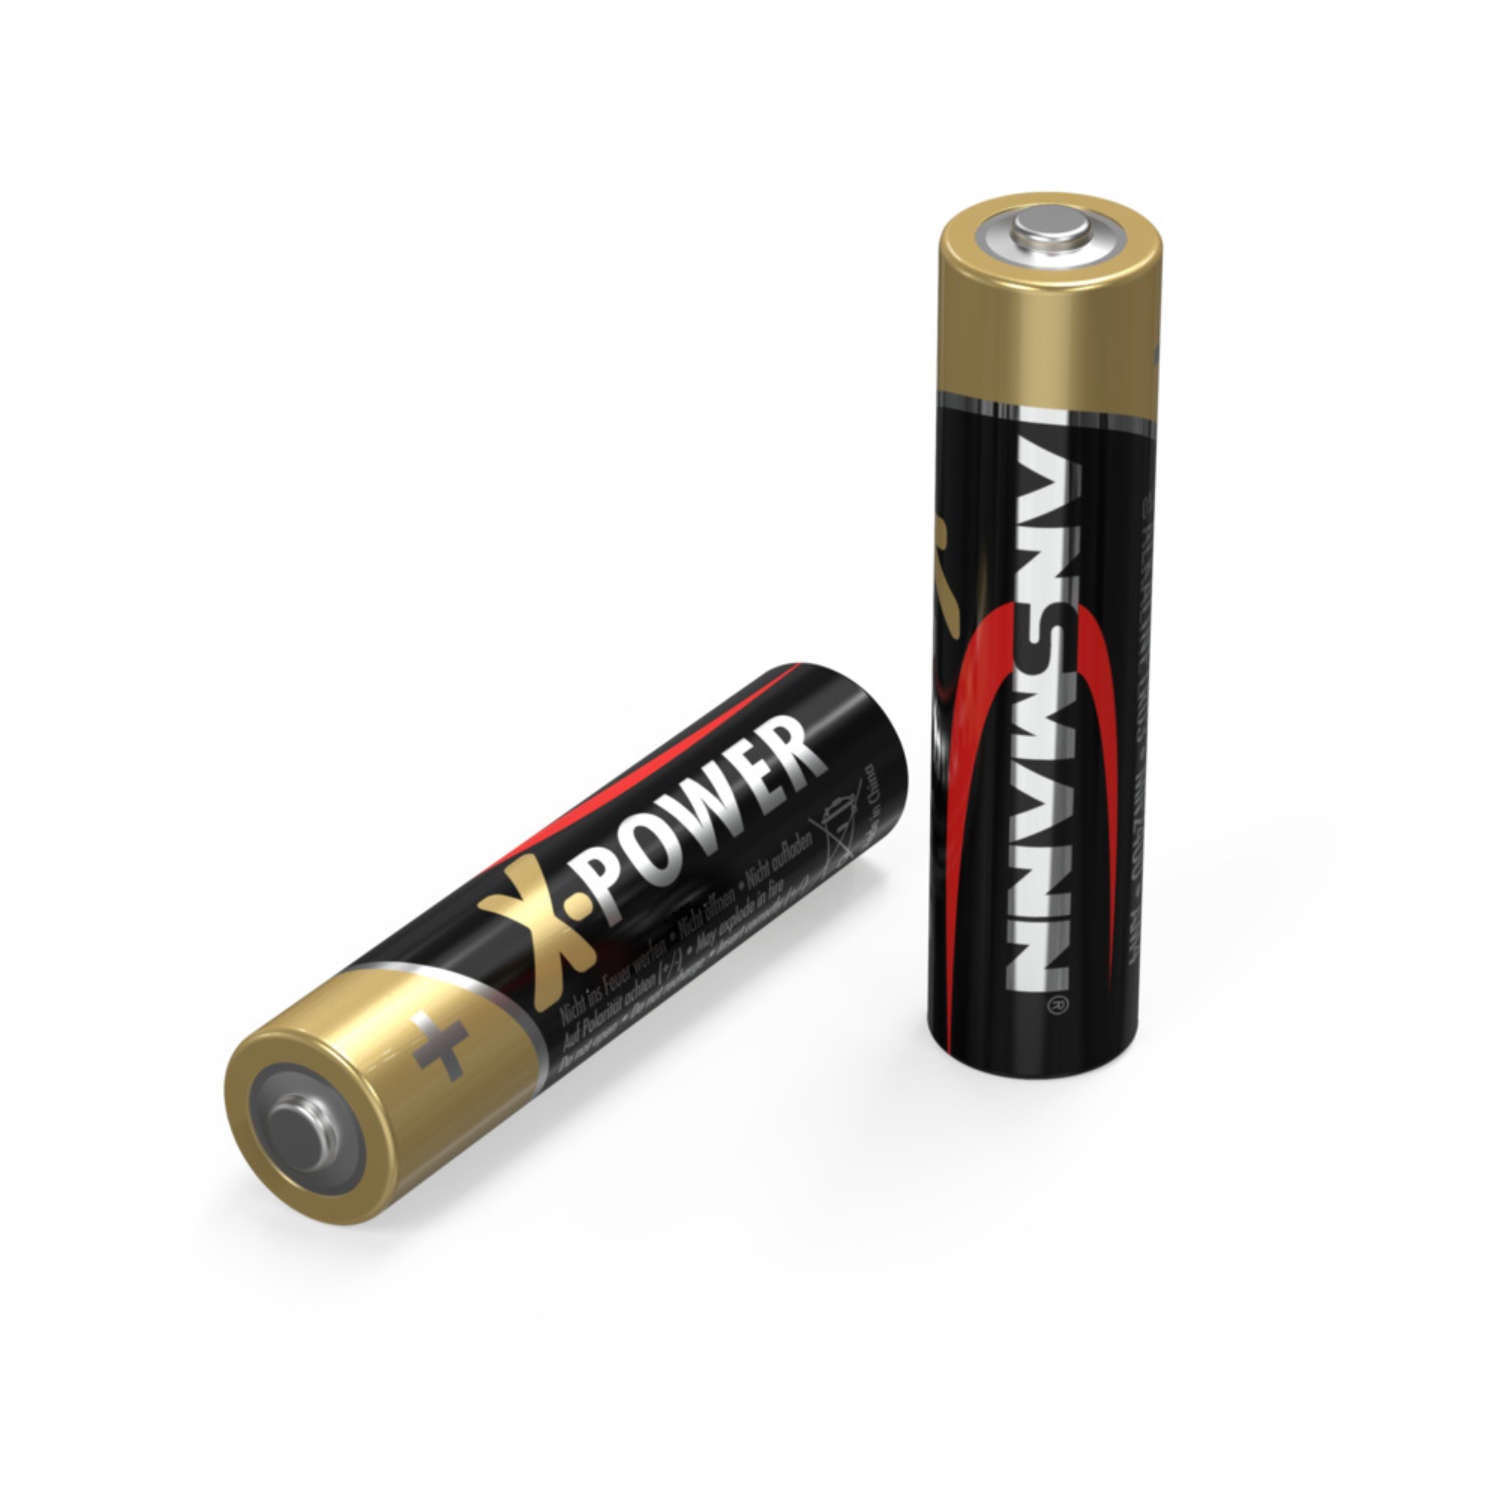 X-Power Alkaline Batteries